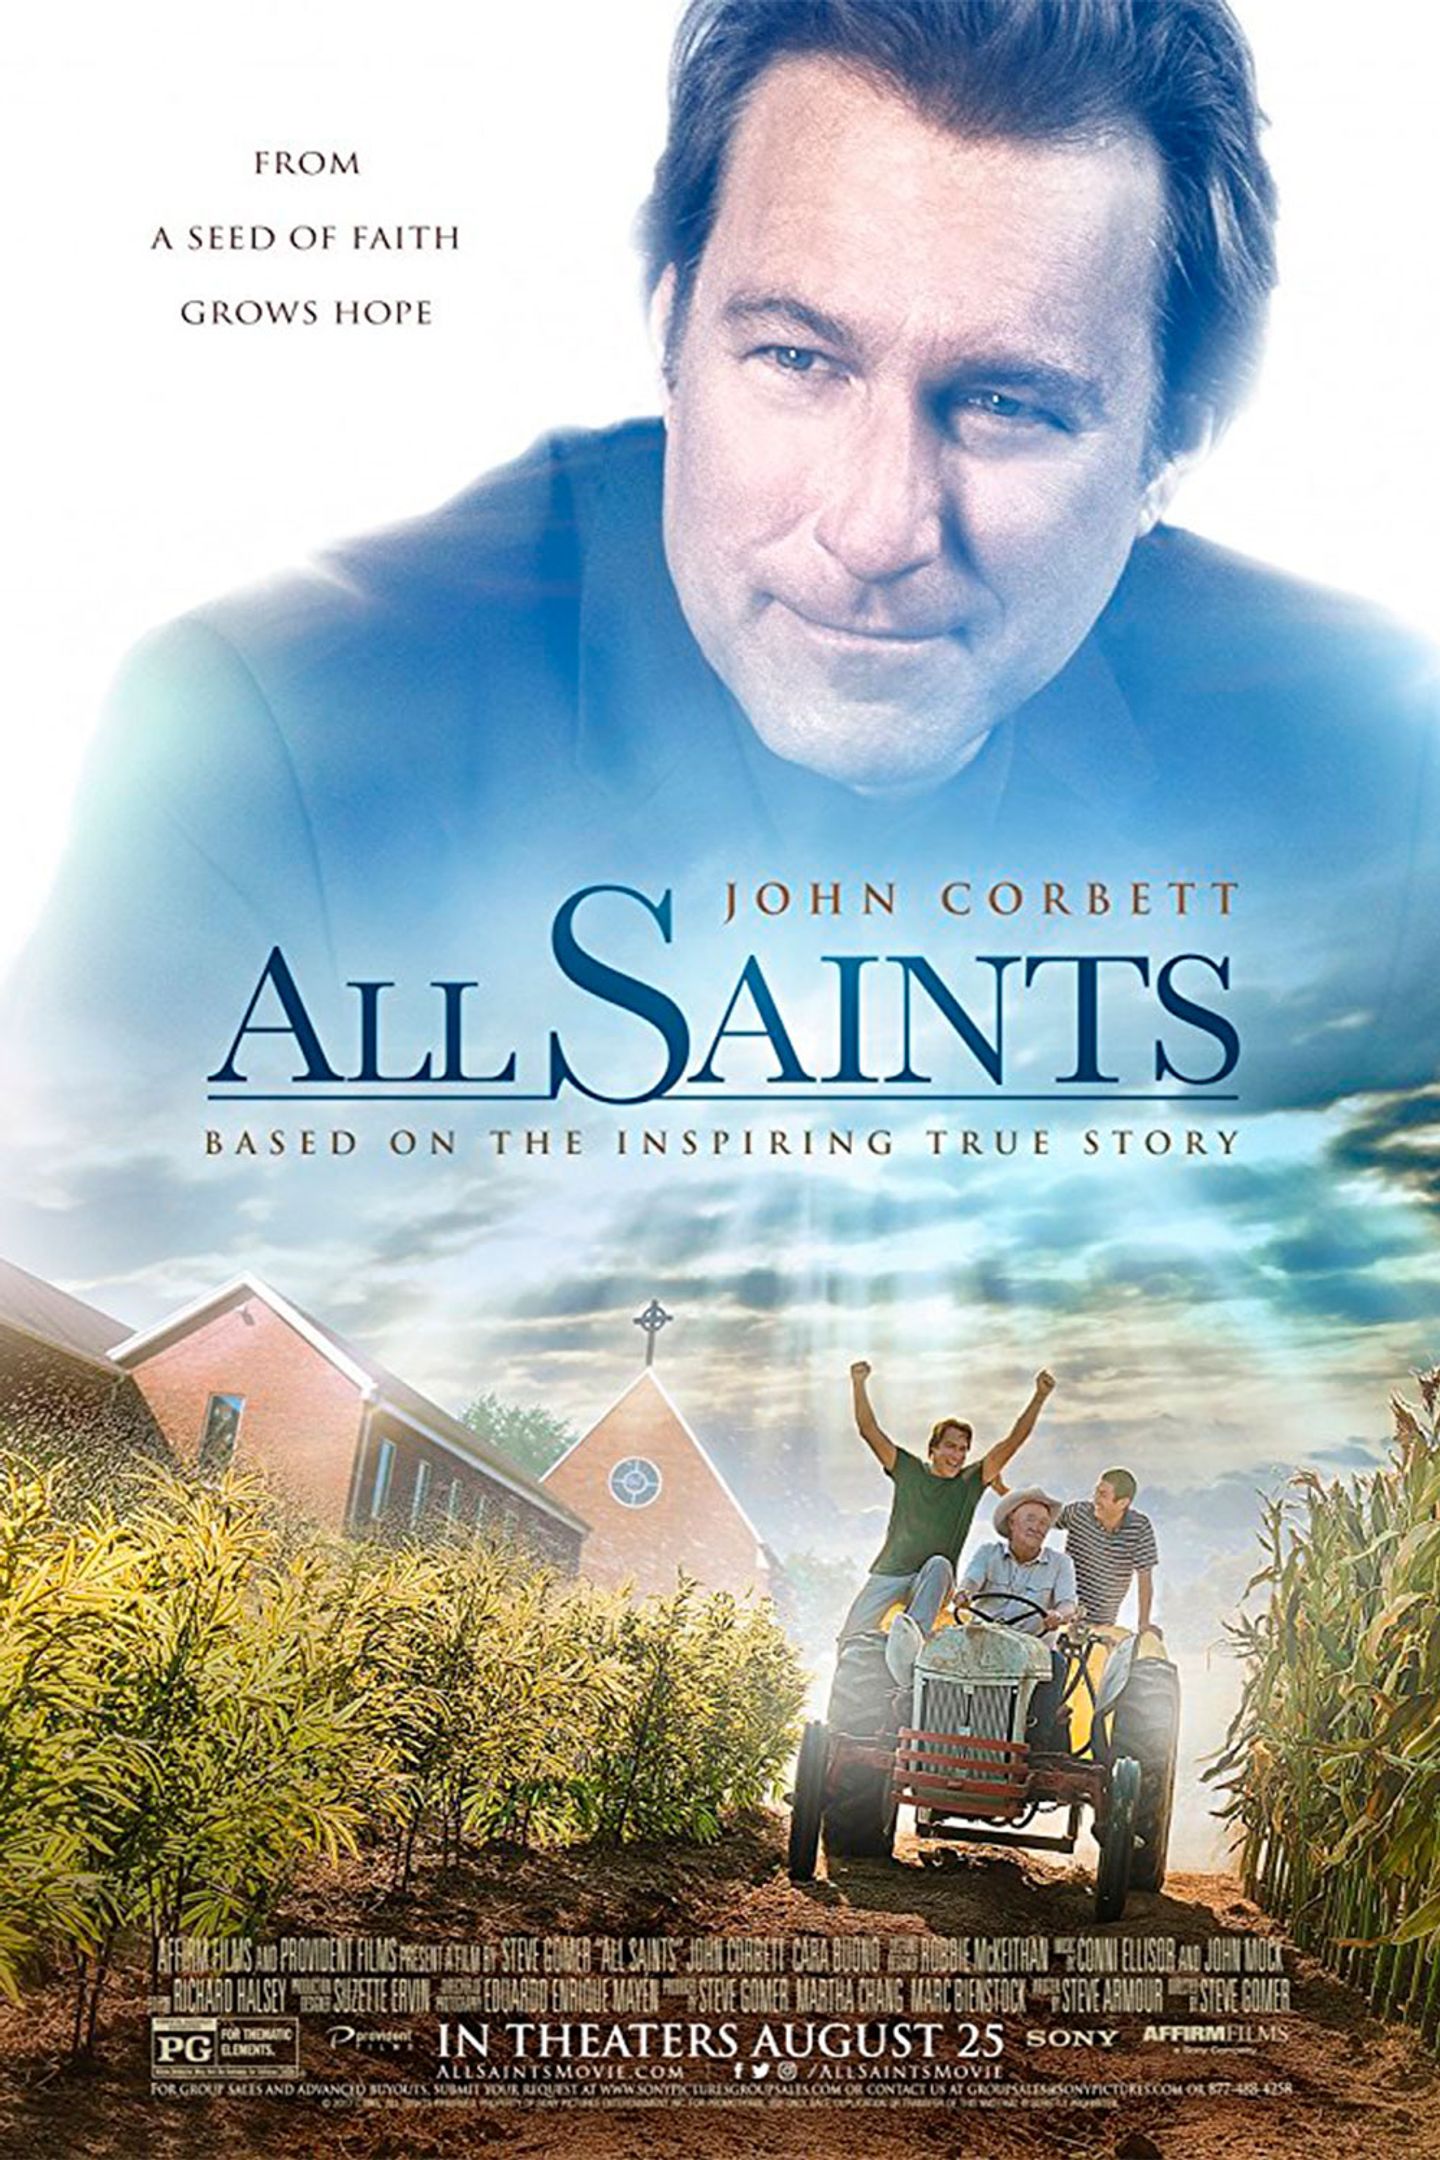 Plakat for 'All Saints'